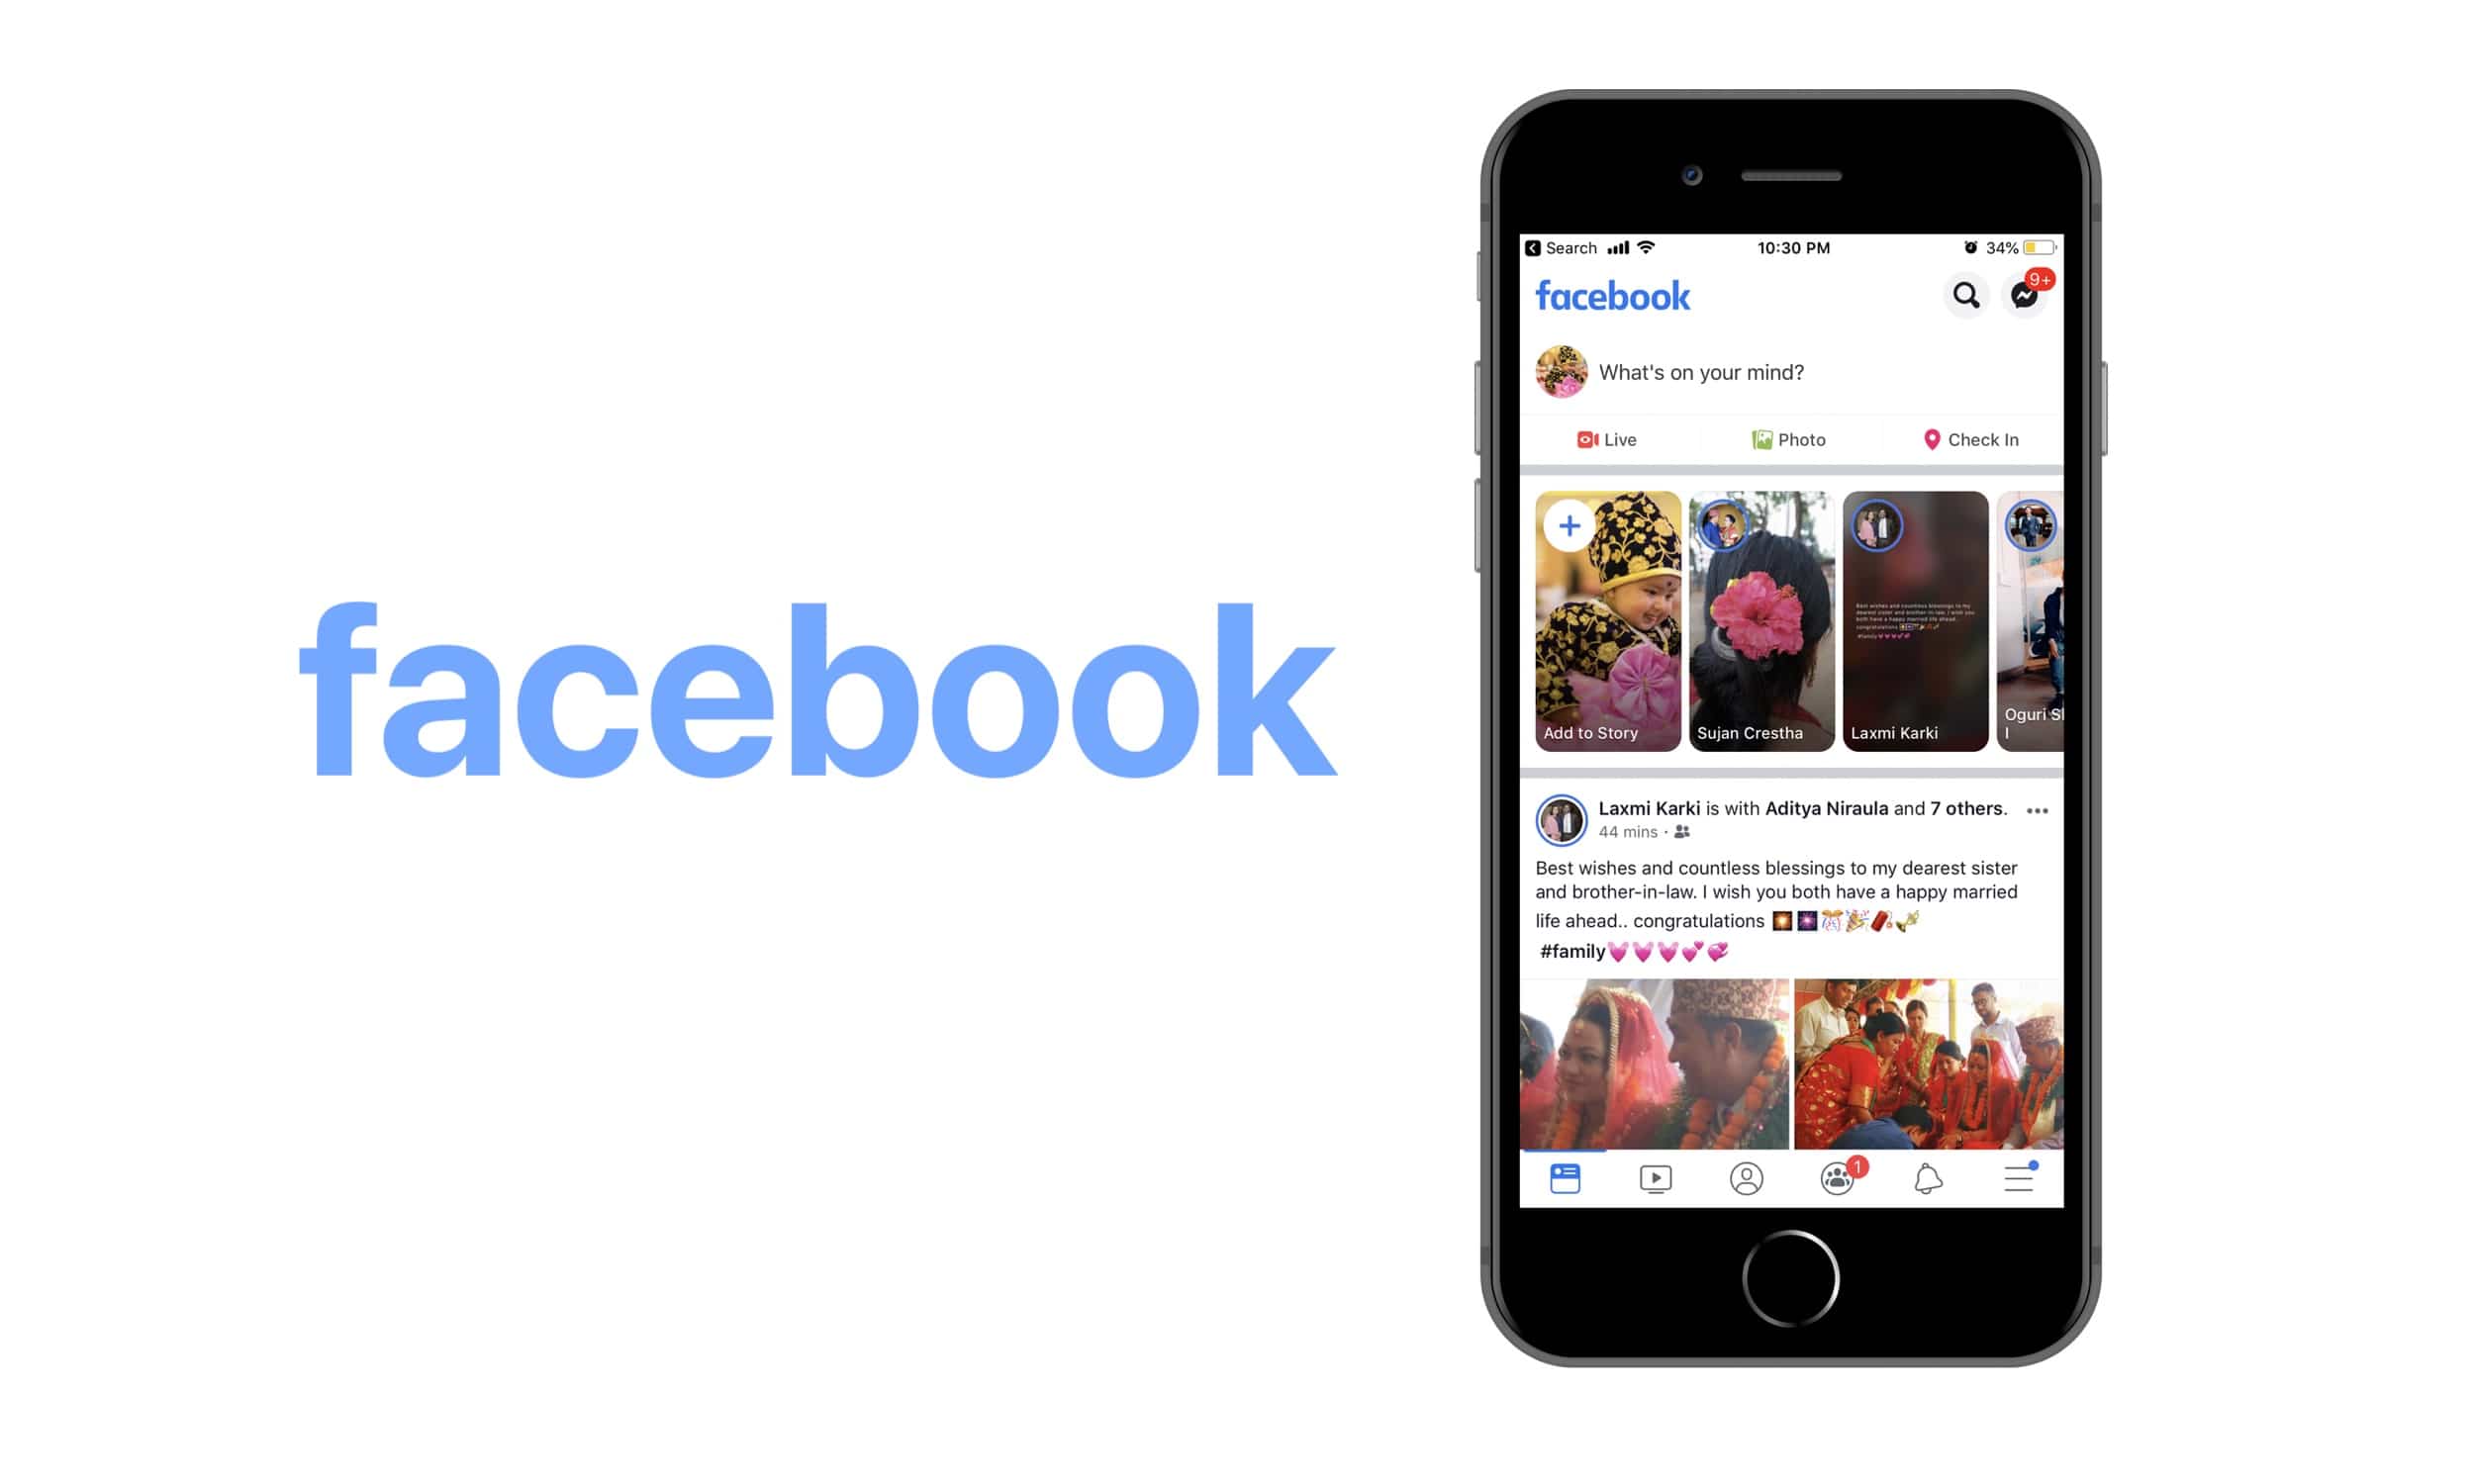 facebook-new-design-update-ios-min